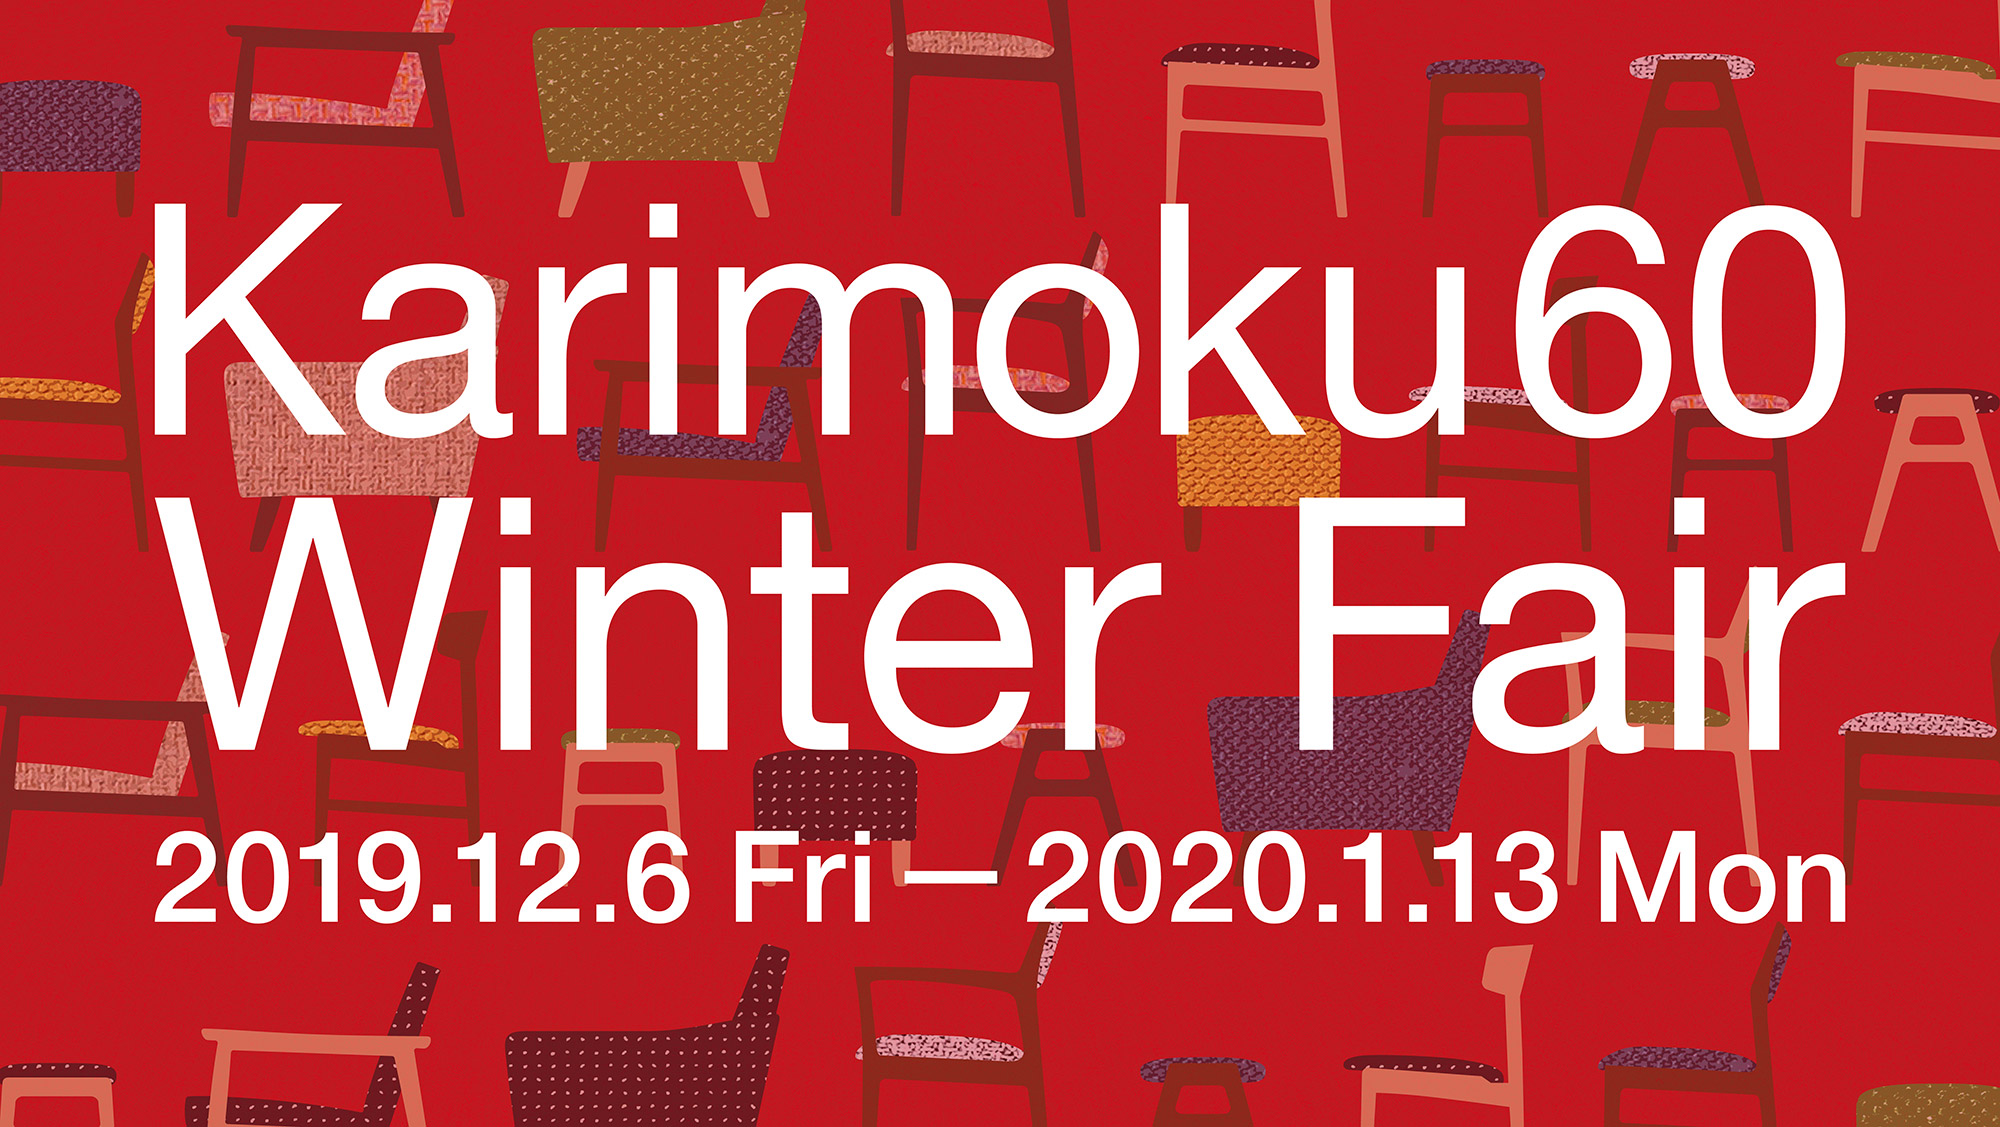 Karimoku60 Winter Fair 2019.12.6 Fri-2020.1.13 Mon